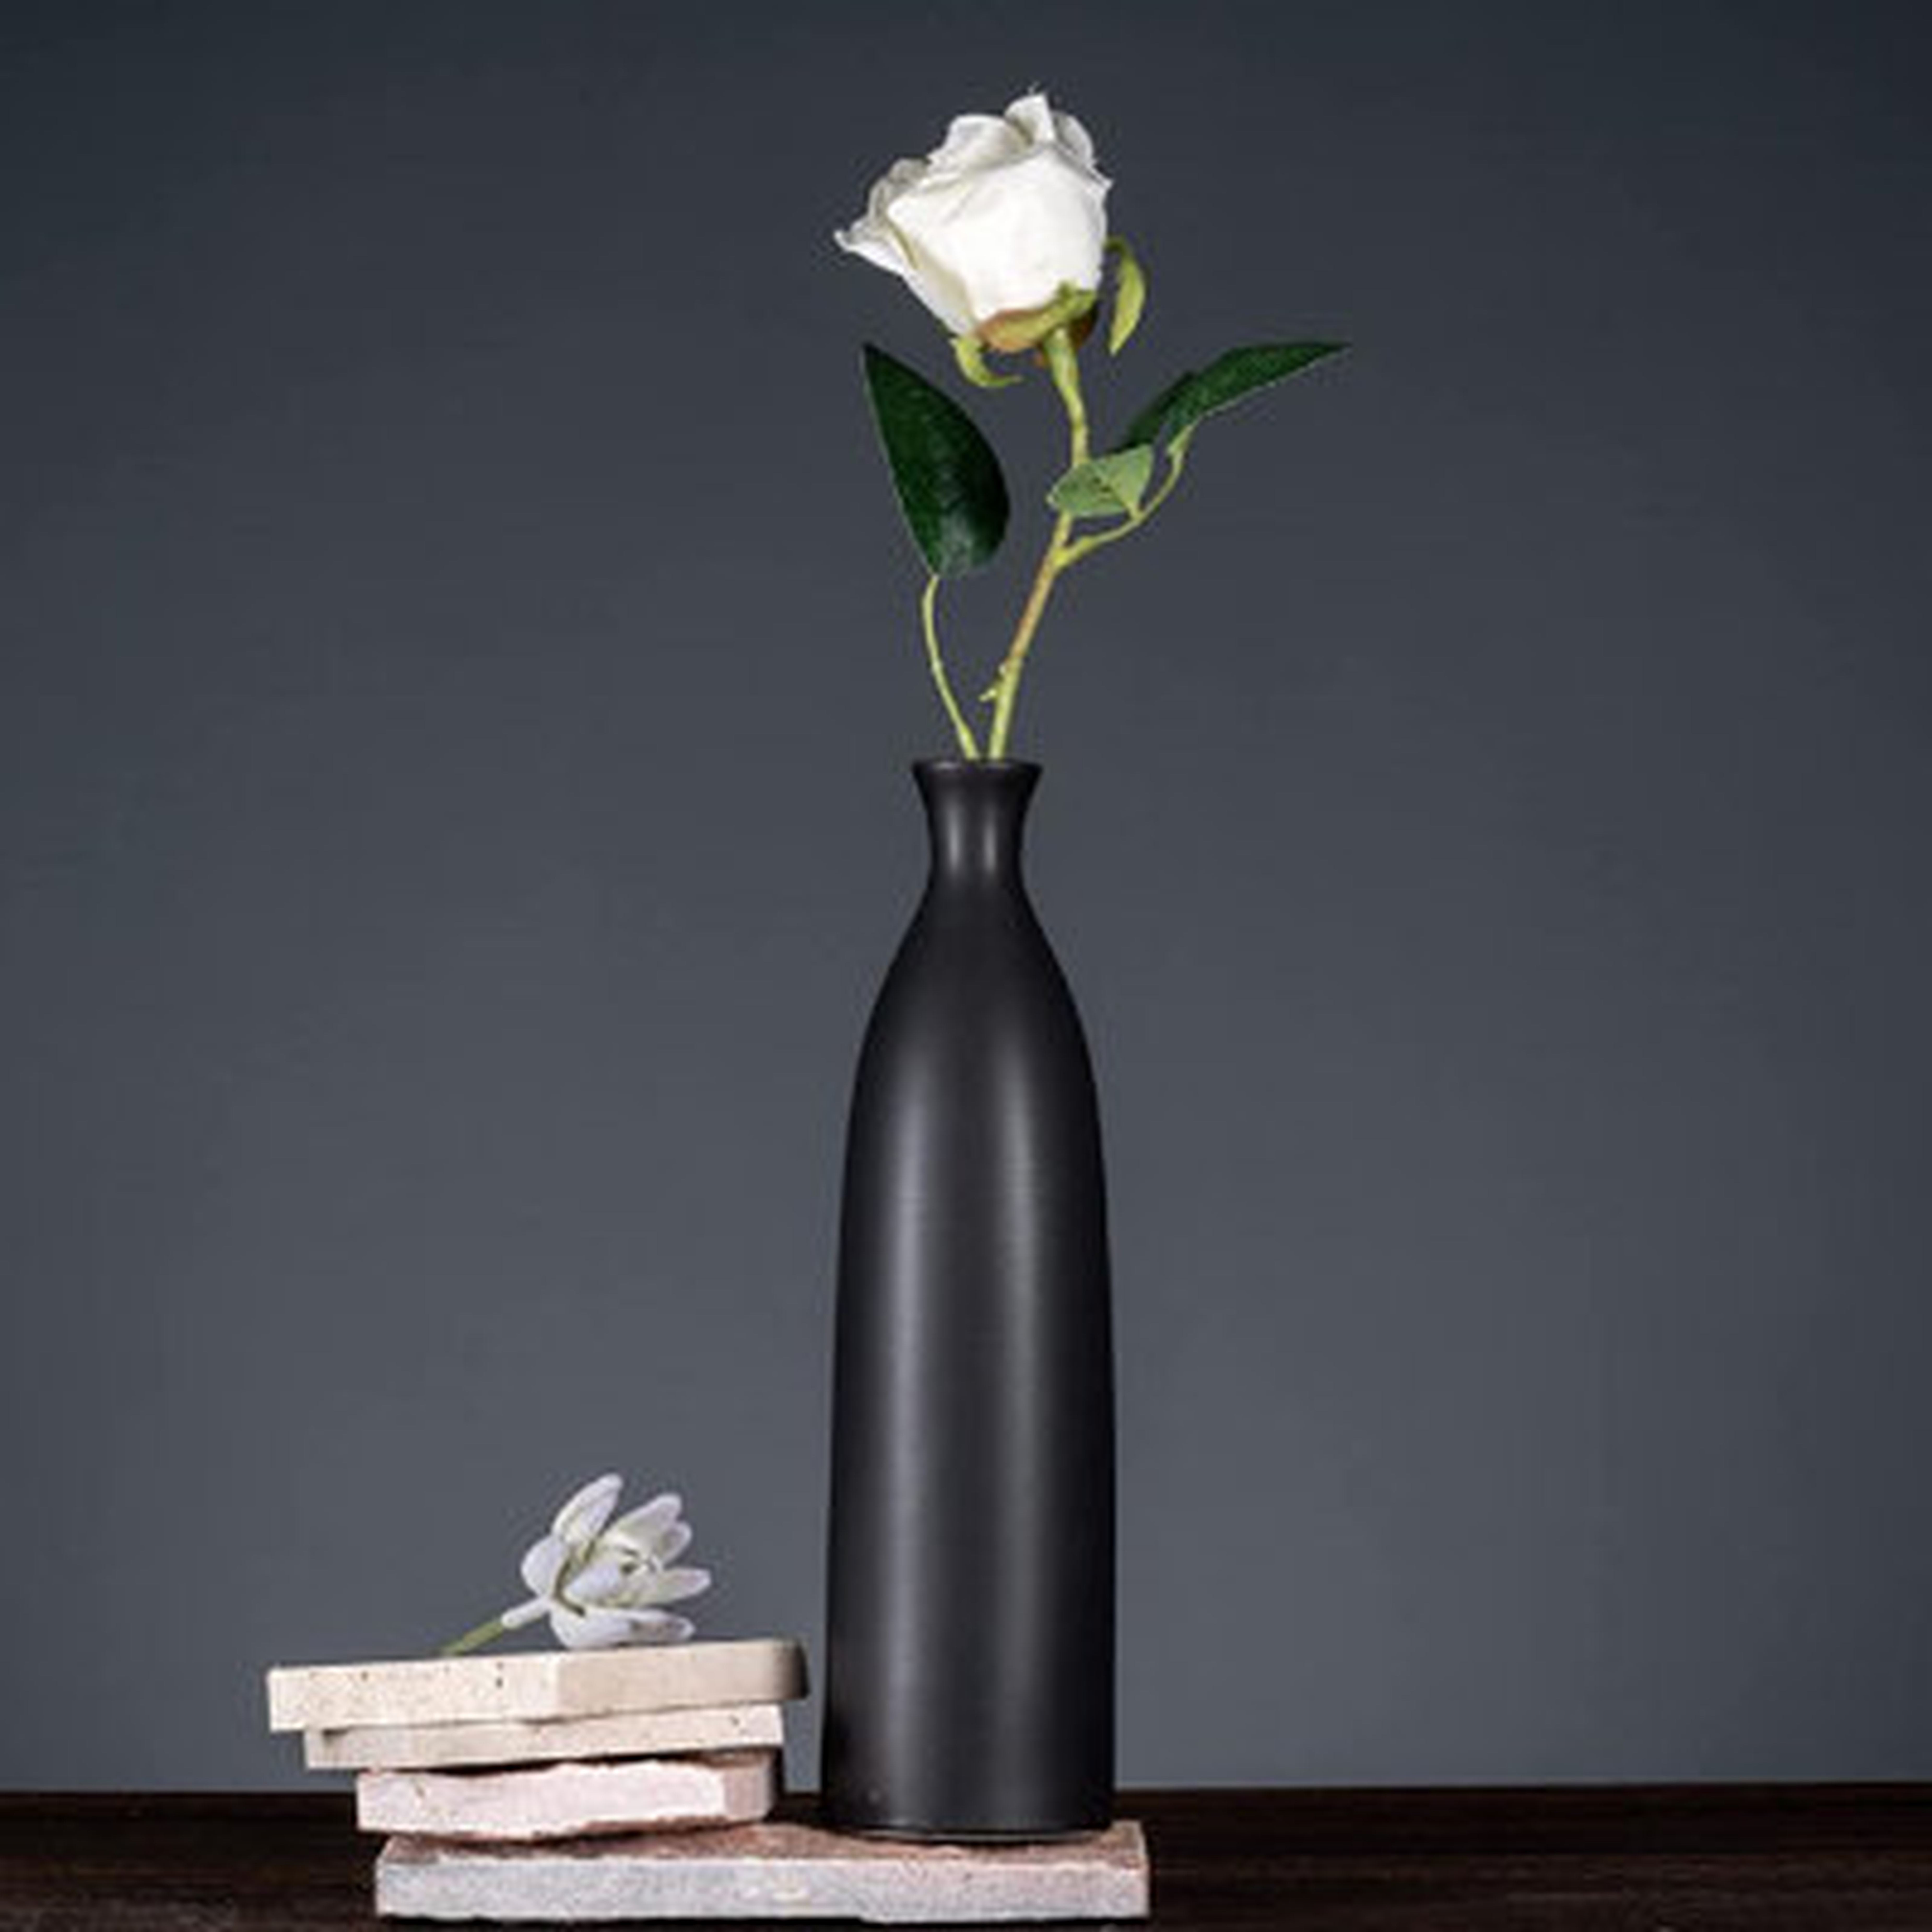 Ceramic Decorative Flower Vases For Farmhouse Decorations Or Modern Home Decor - Wayfair